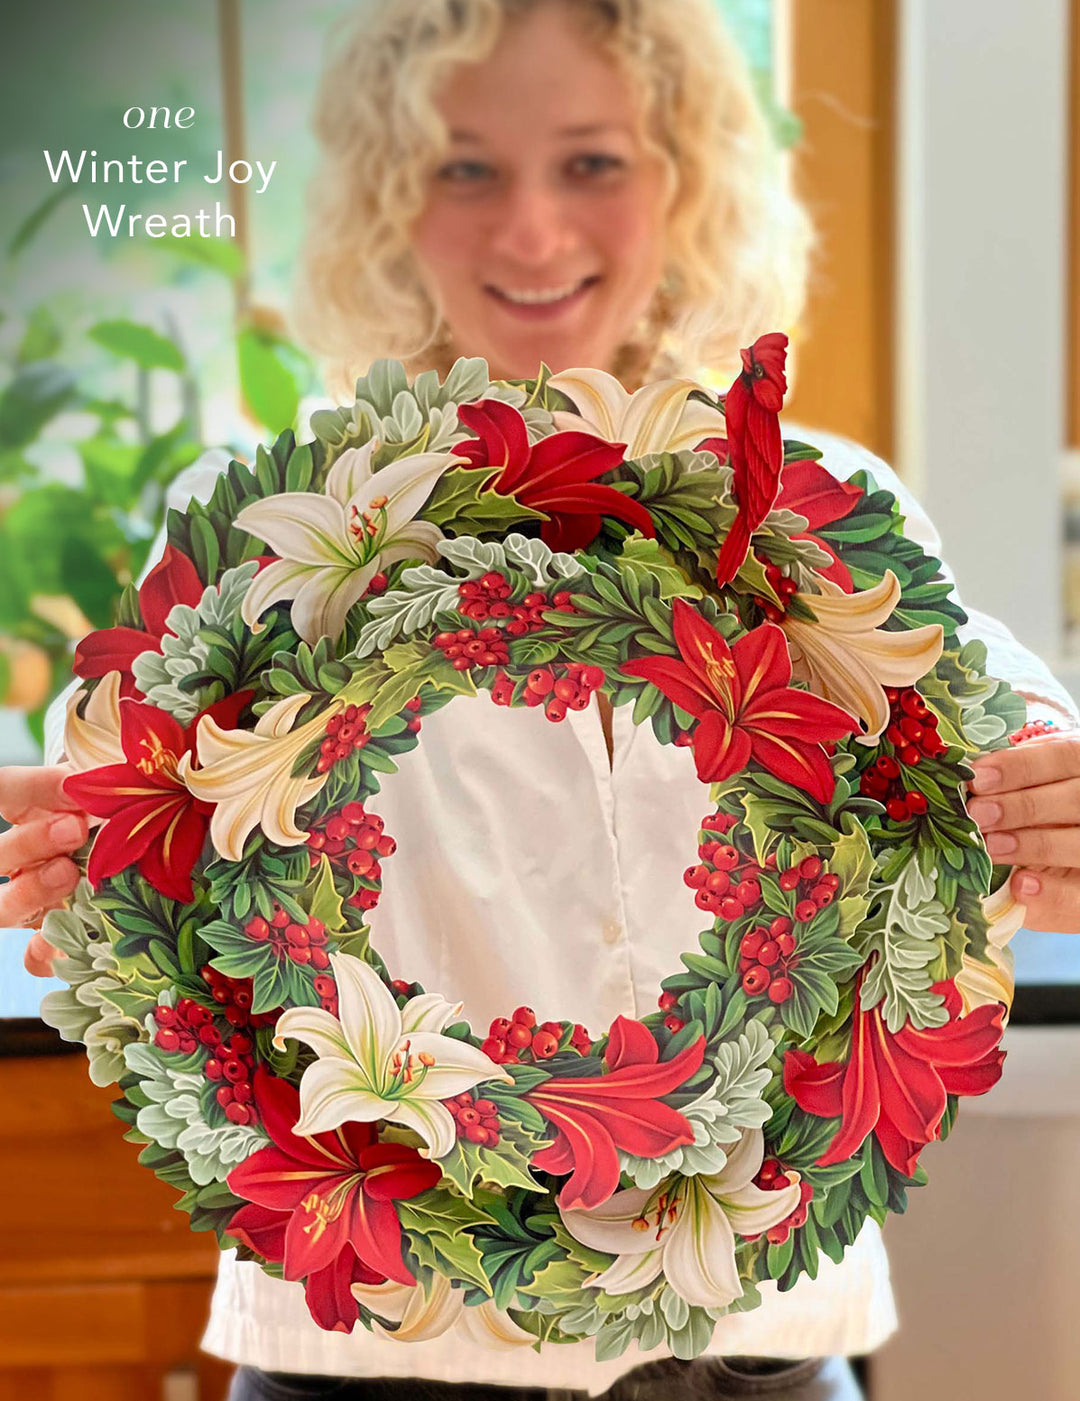 Bundle includes one Winter Joy Wreath